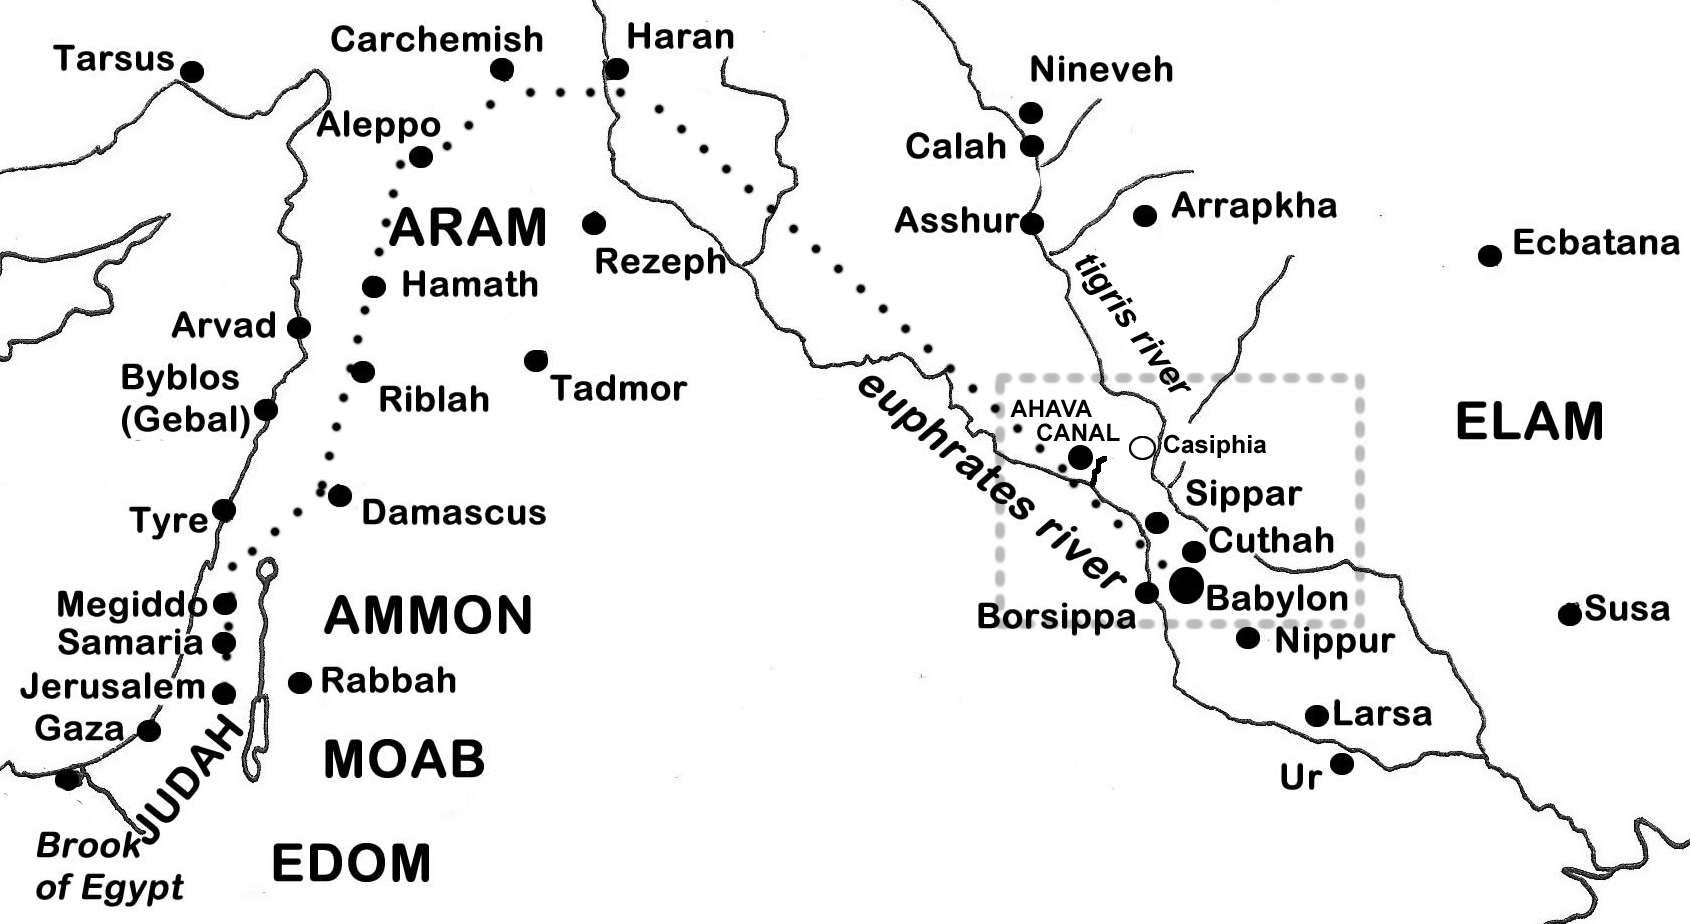 253B Ahava Canal and Casiphia in Babylon